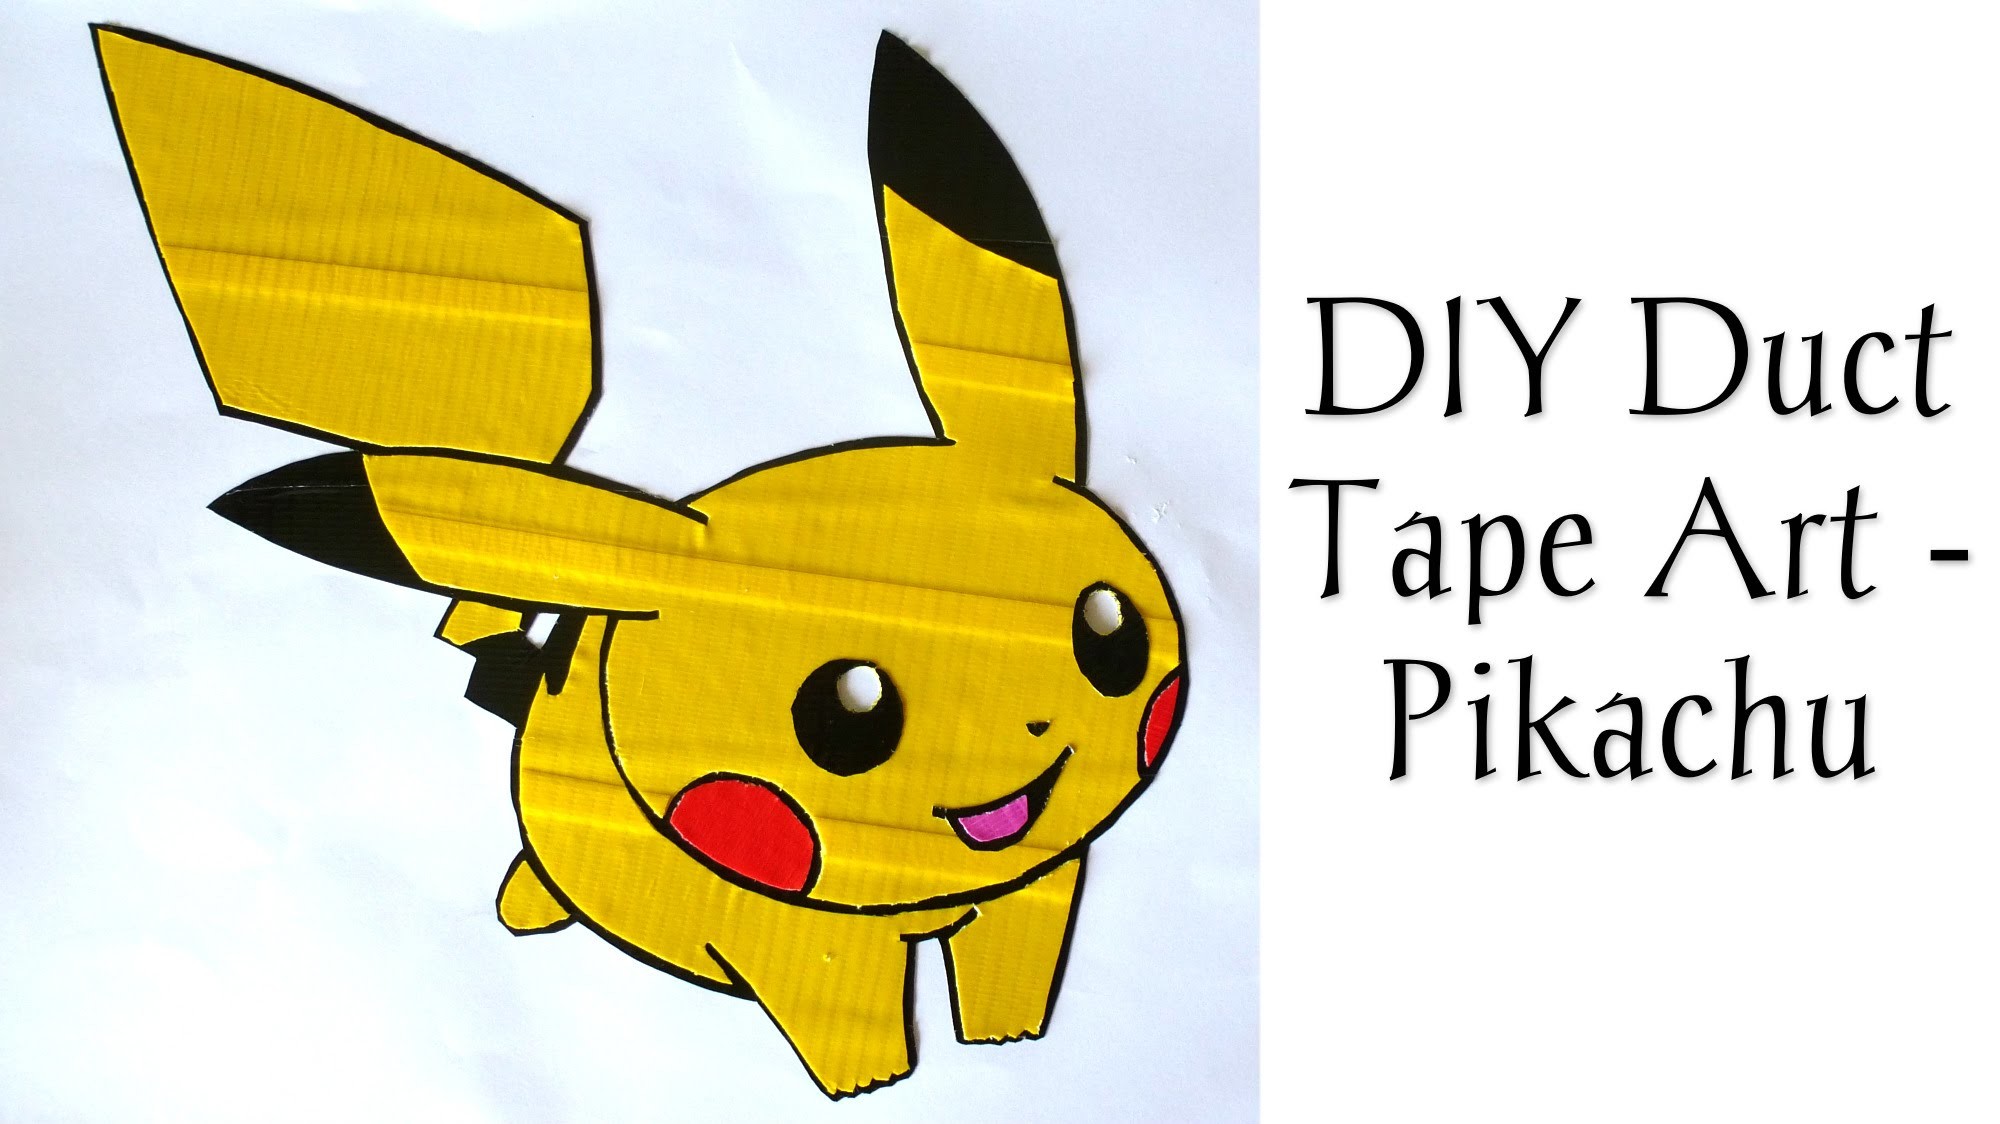 DIY Duct Tape Art - Pikachu